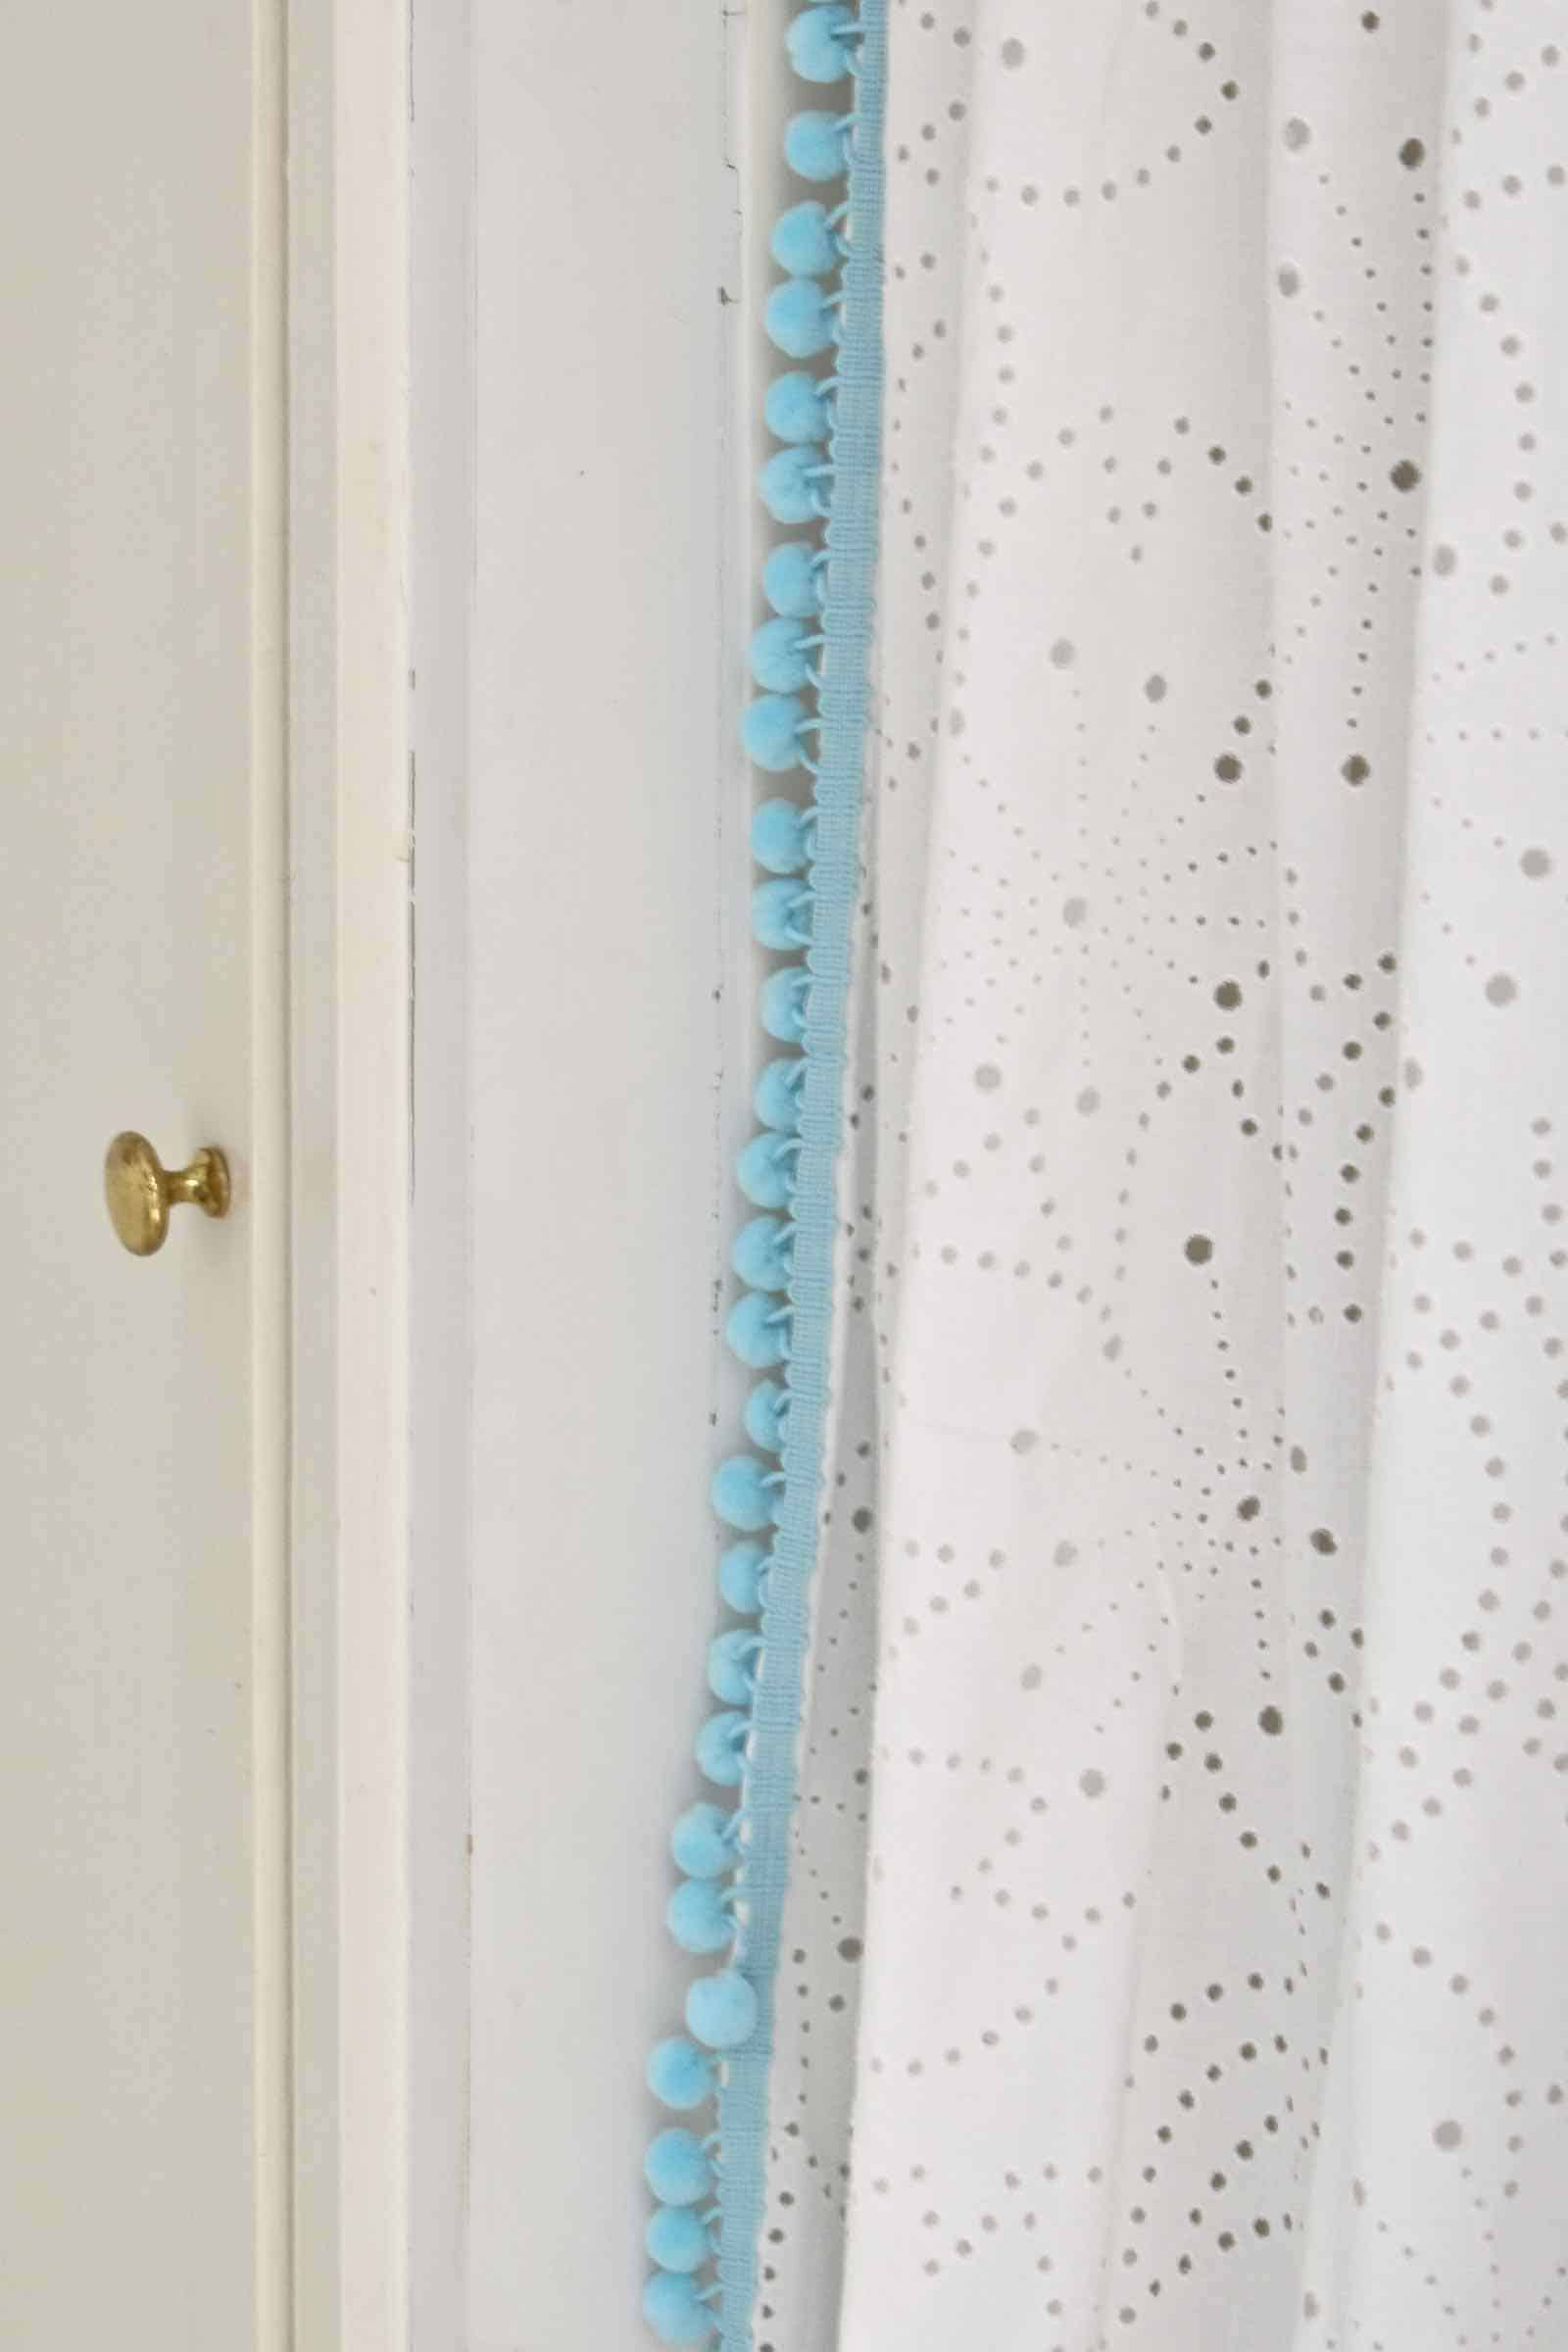 ball fringe on the shower curtain